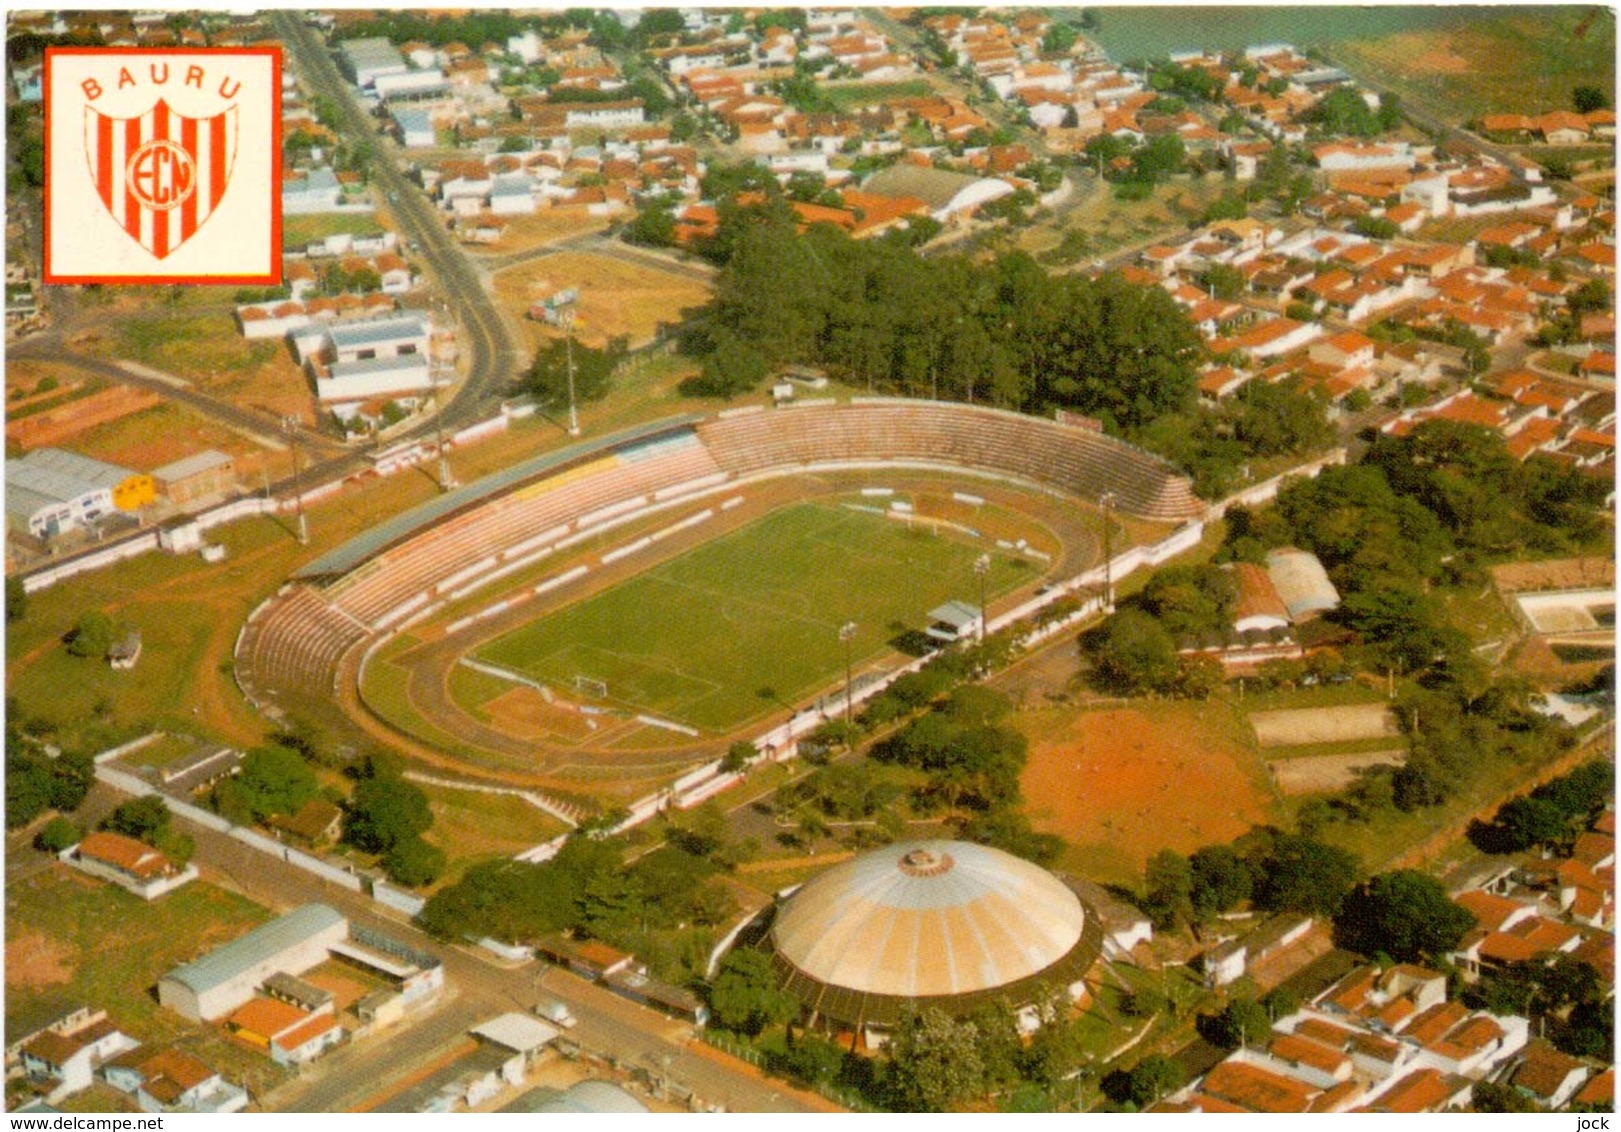 Postcard Stadium Bauru Brazil E.C. Noroeste Stadion Stadio - Estadio - Stade - Football - Fussball